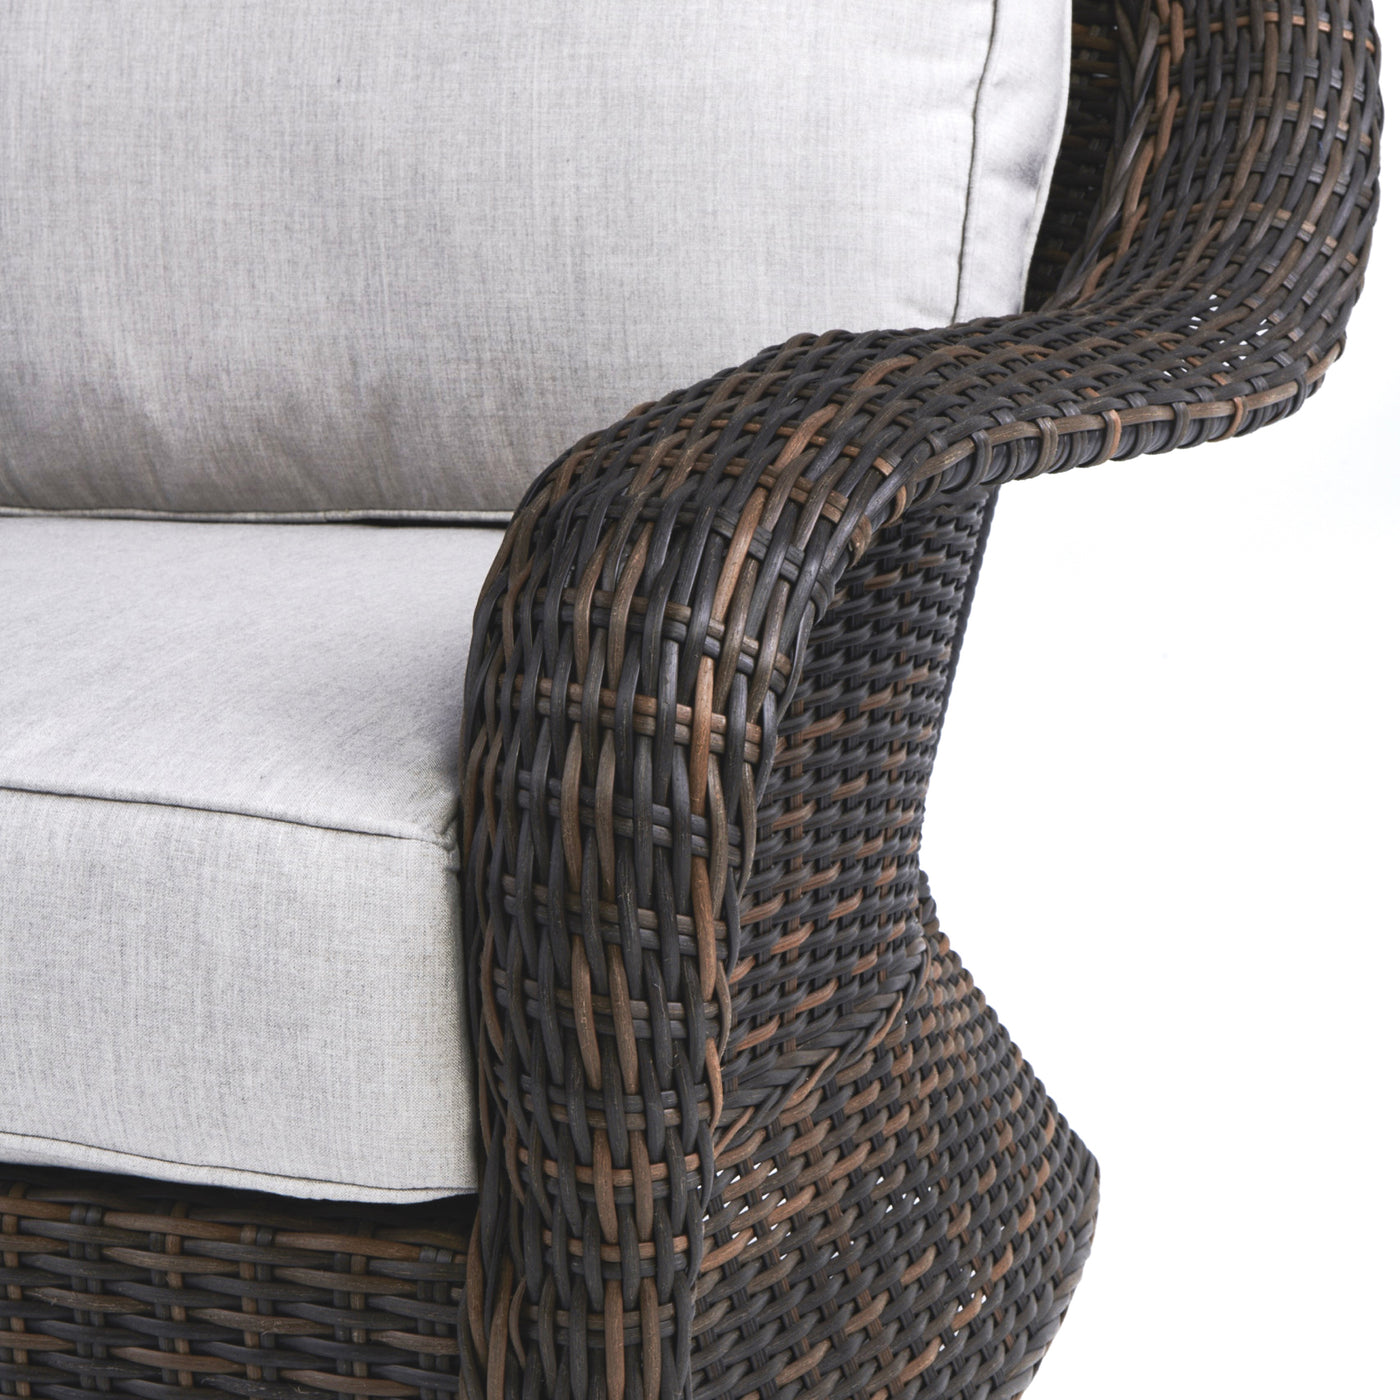  Yardbird Waverly Outdoor Sofa Set with Swivel Chairs Outdoor Furniture